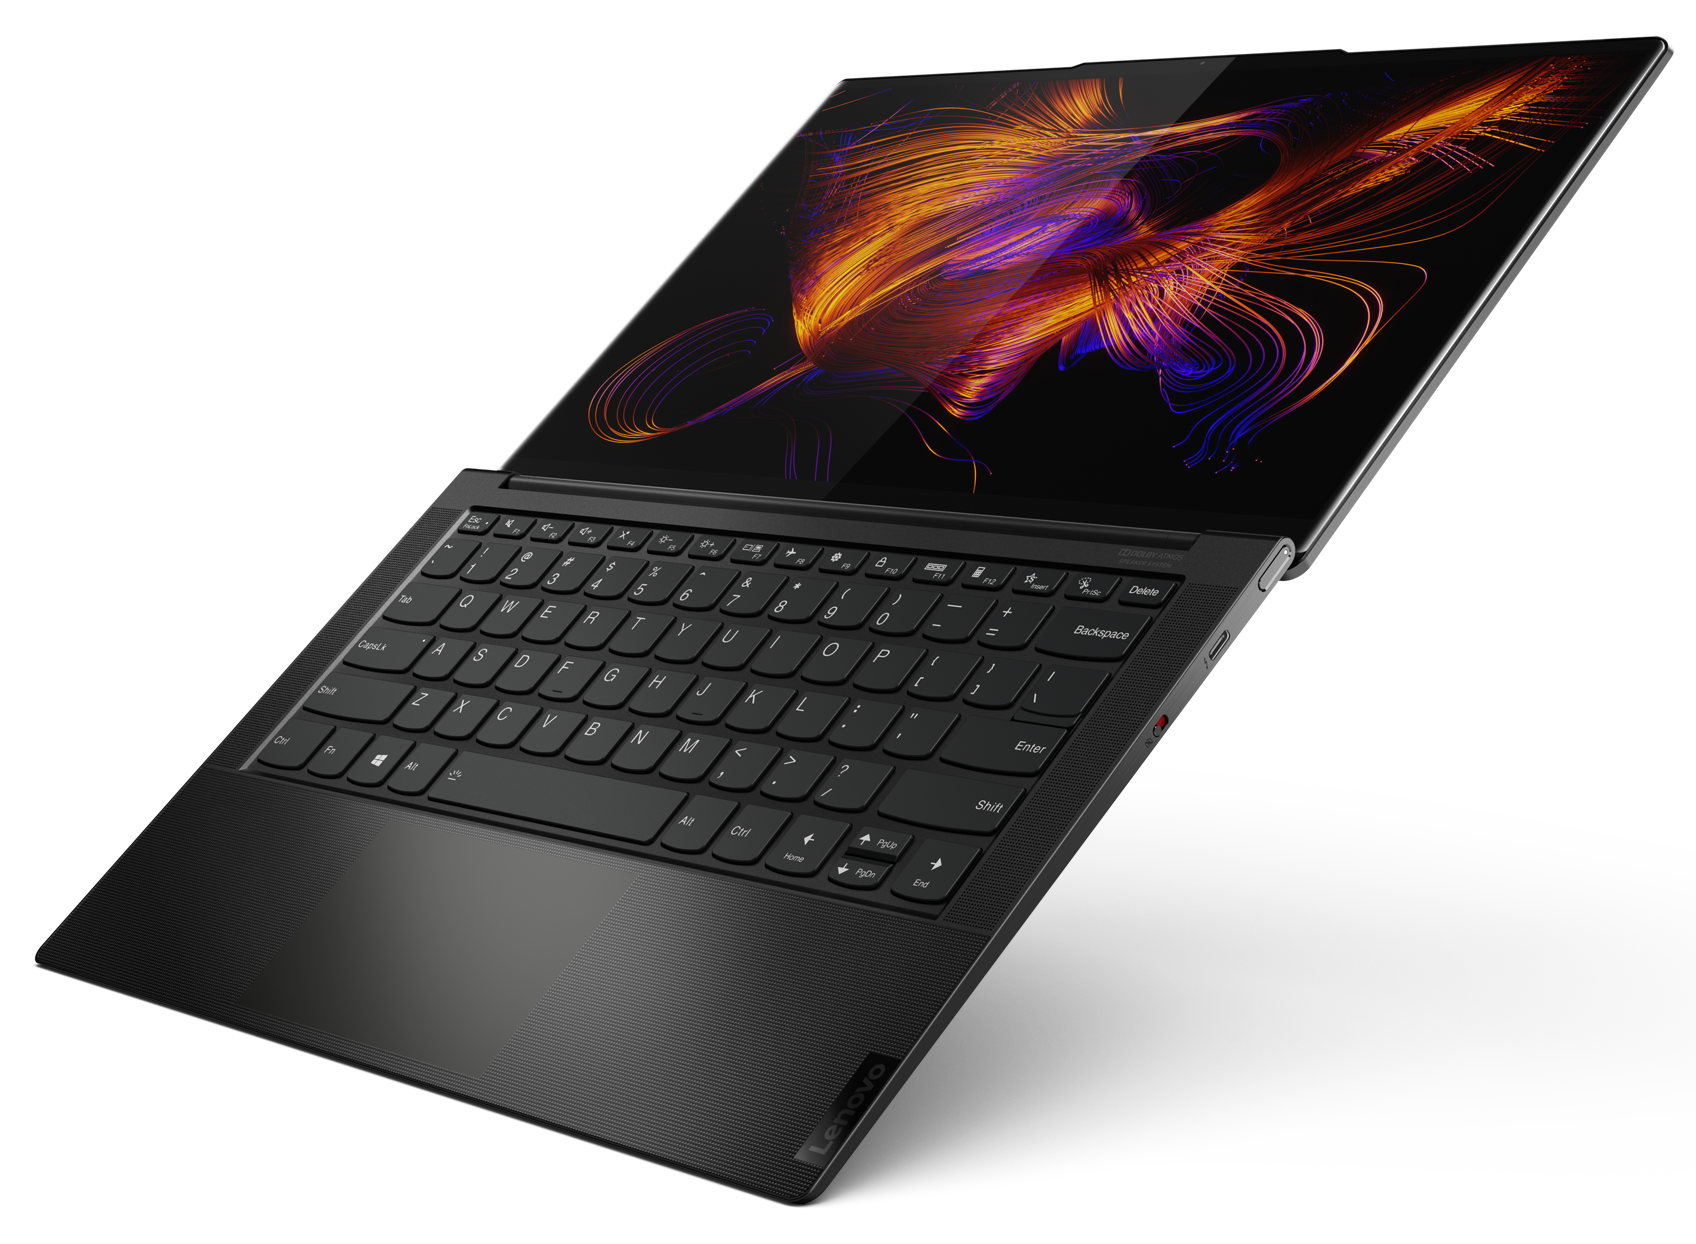 Lenovo Yoga Slim 9i: Clamshell consumer flagship has a bigger battery